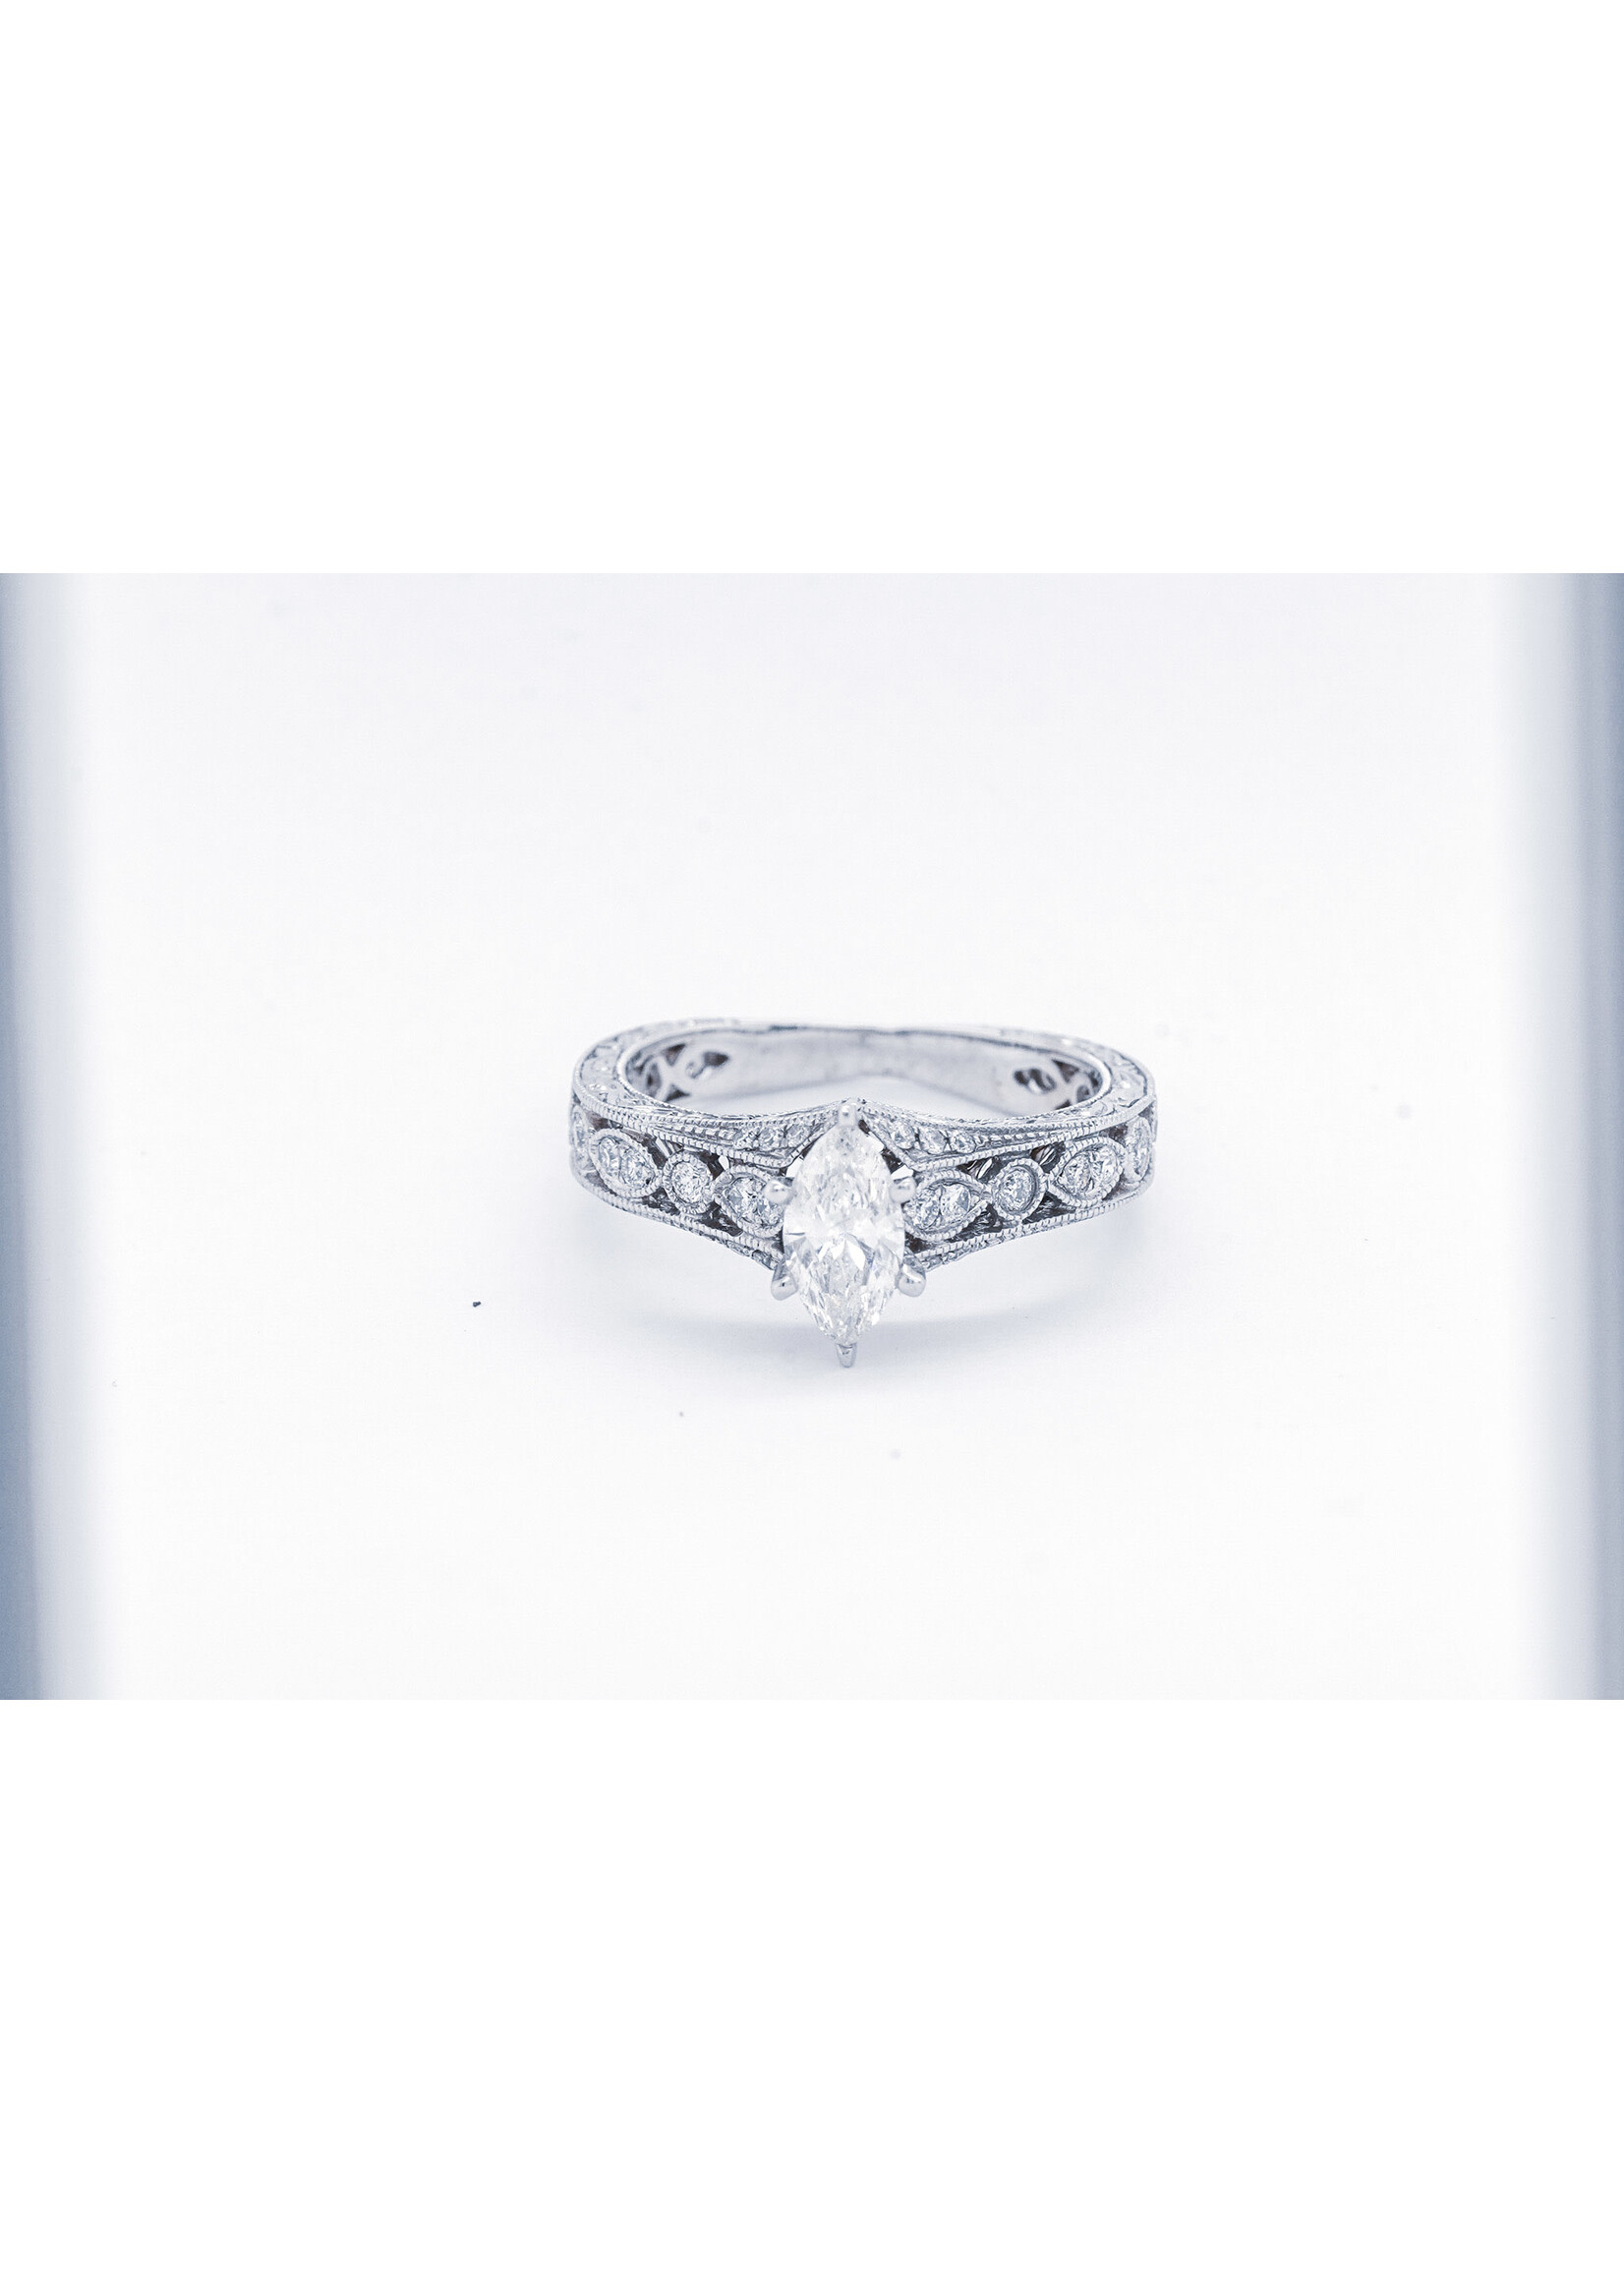 14KW 5.45g 1.16ctw (.60ctr) Diamond Engagement Ring (size 6)